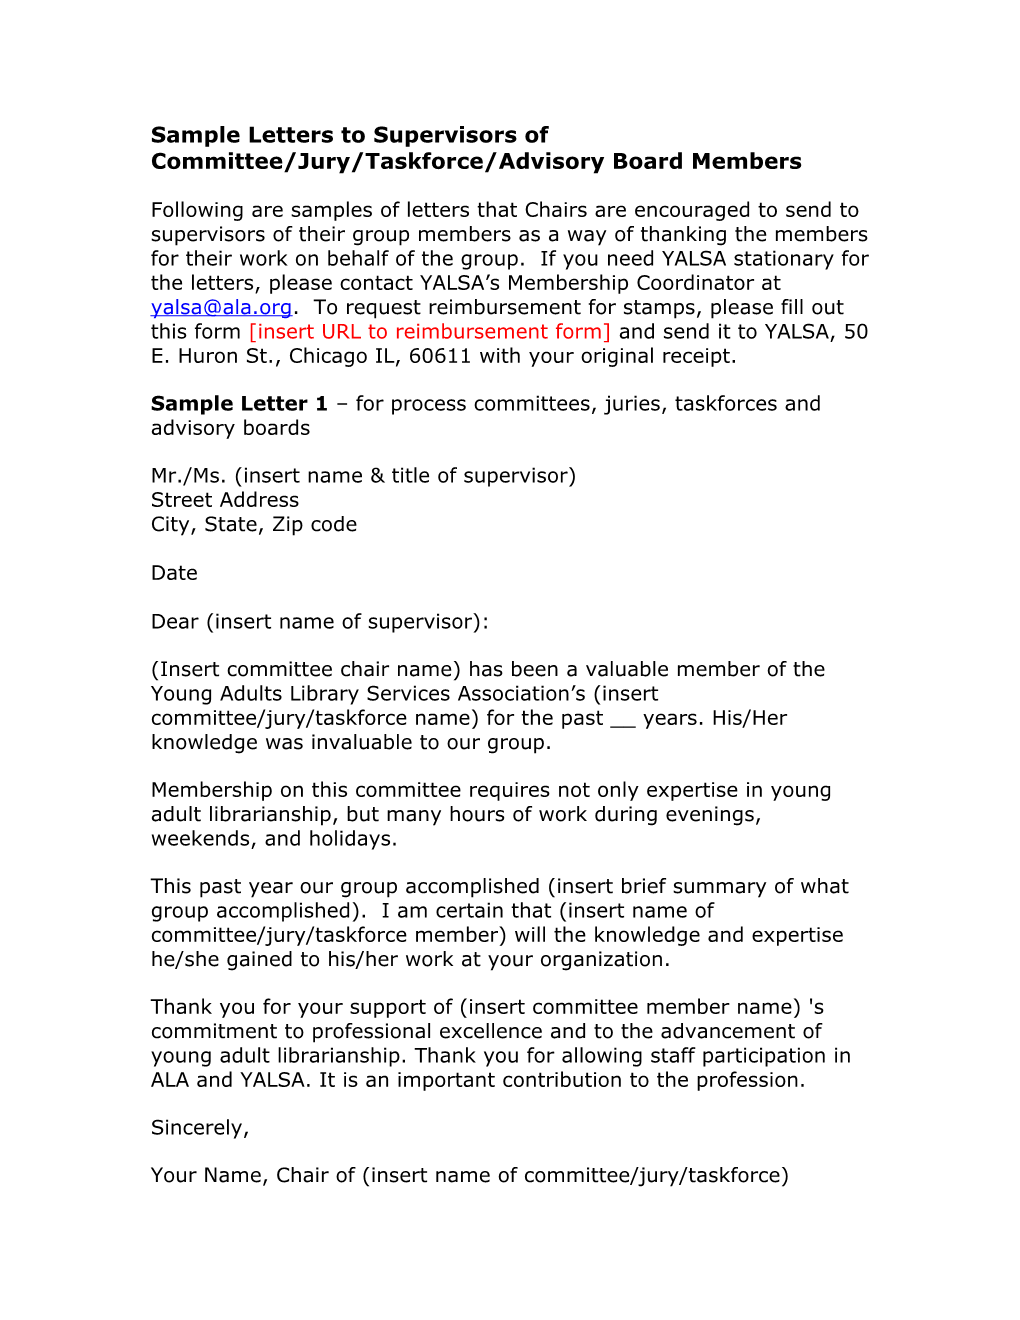 Sample Letters to Supervisors of Committee/Jury/Taskforce/Advisory Board Members